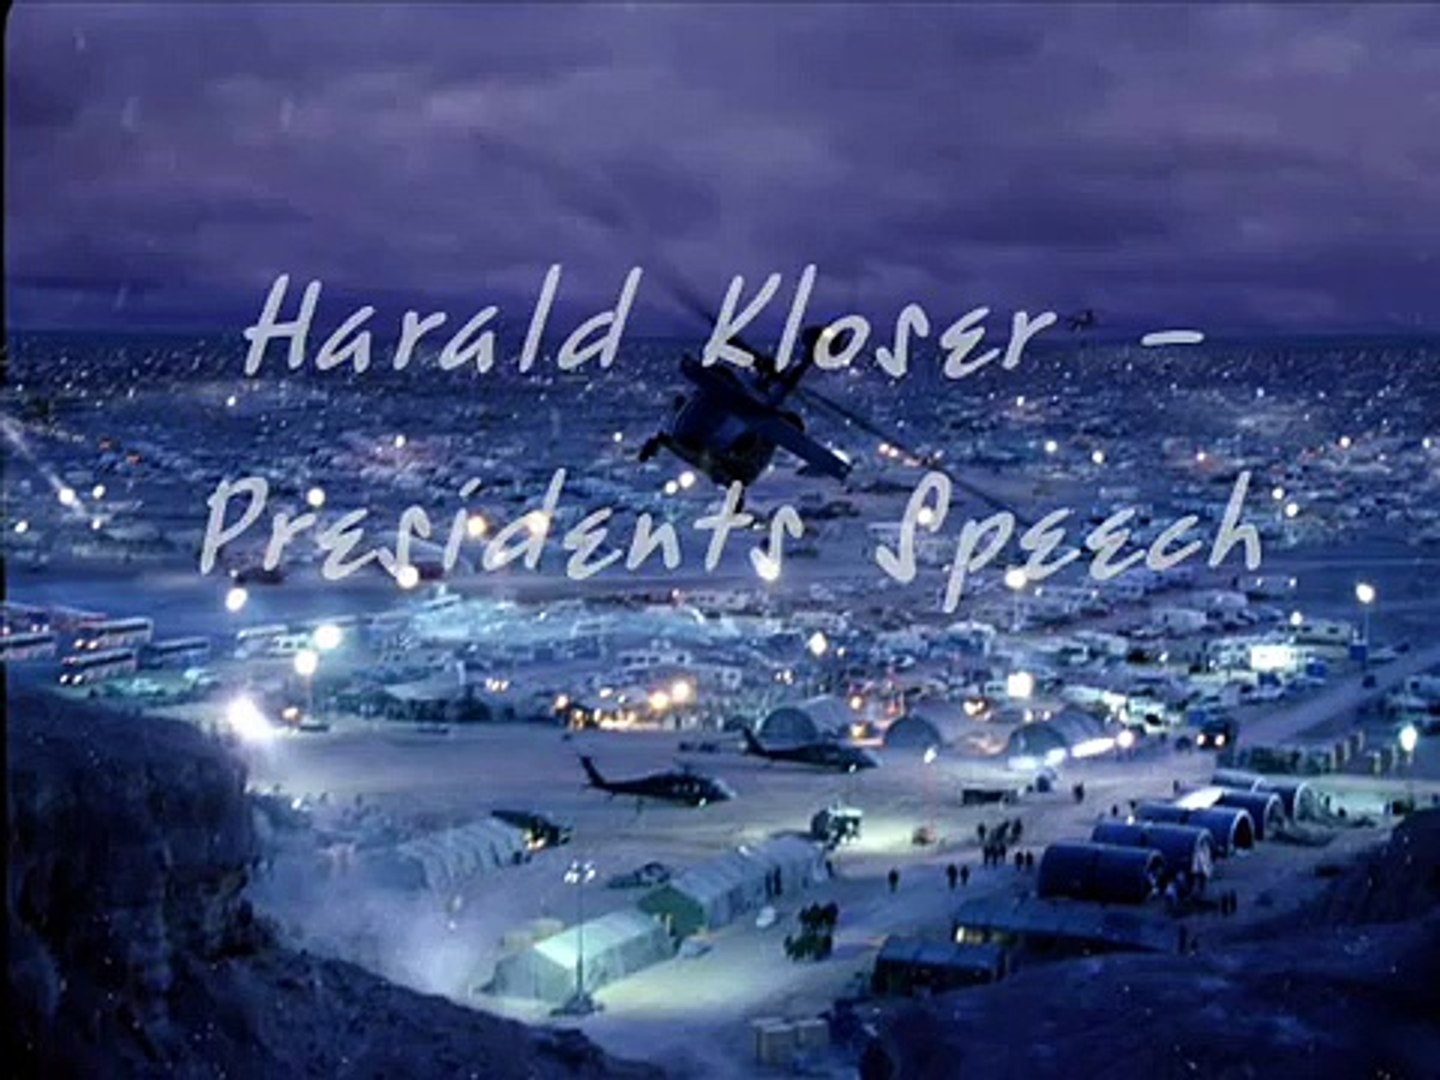 Harald Kloser - Presidents Speech